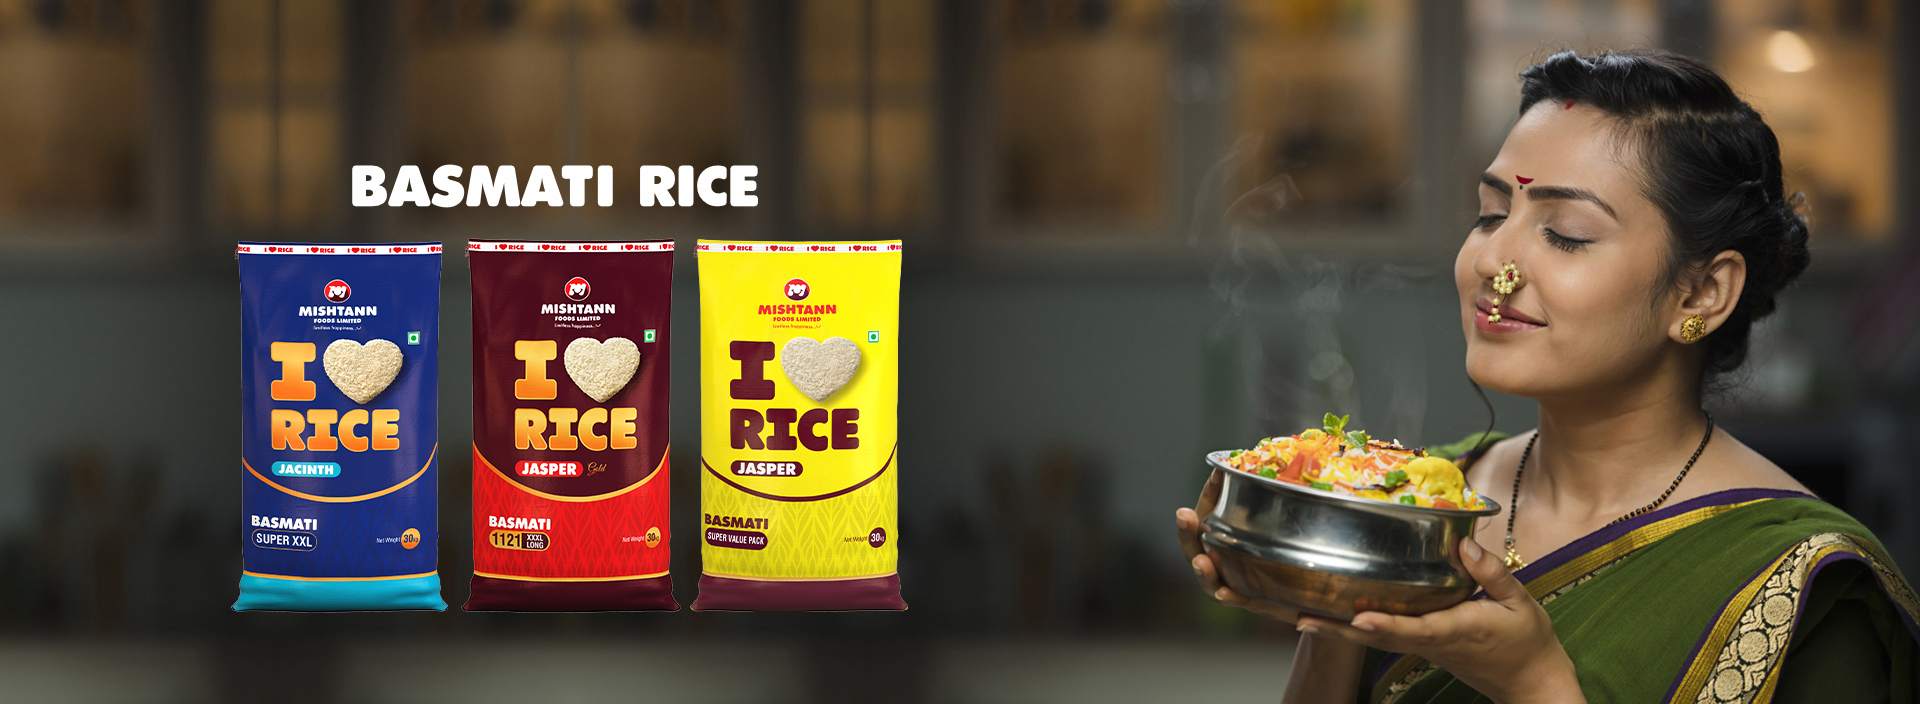 my favourite rice